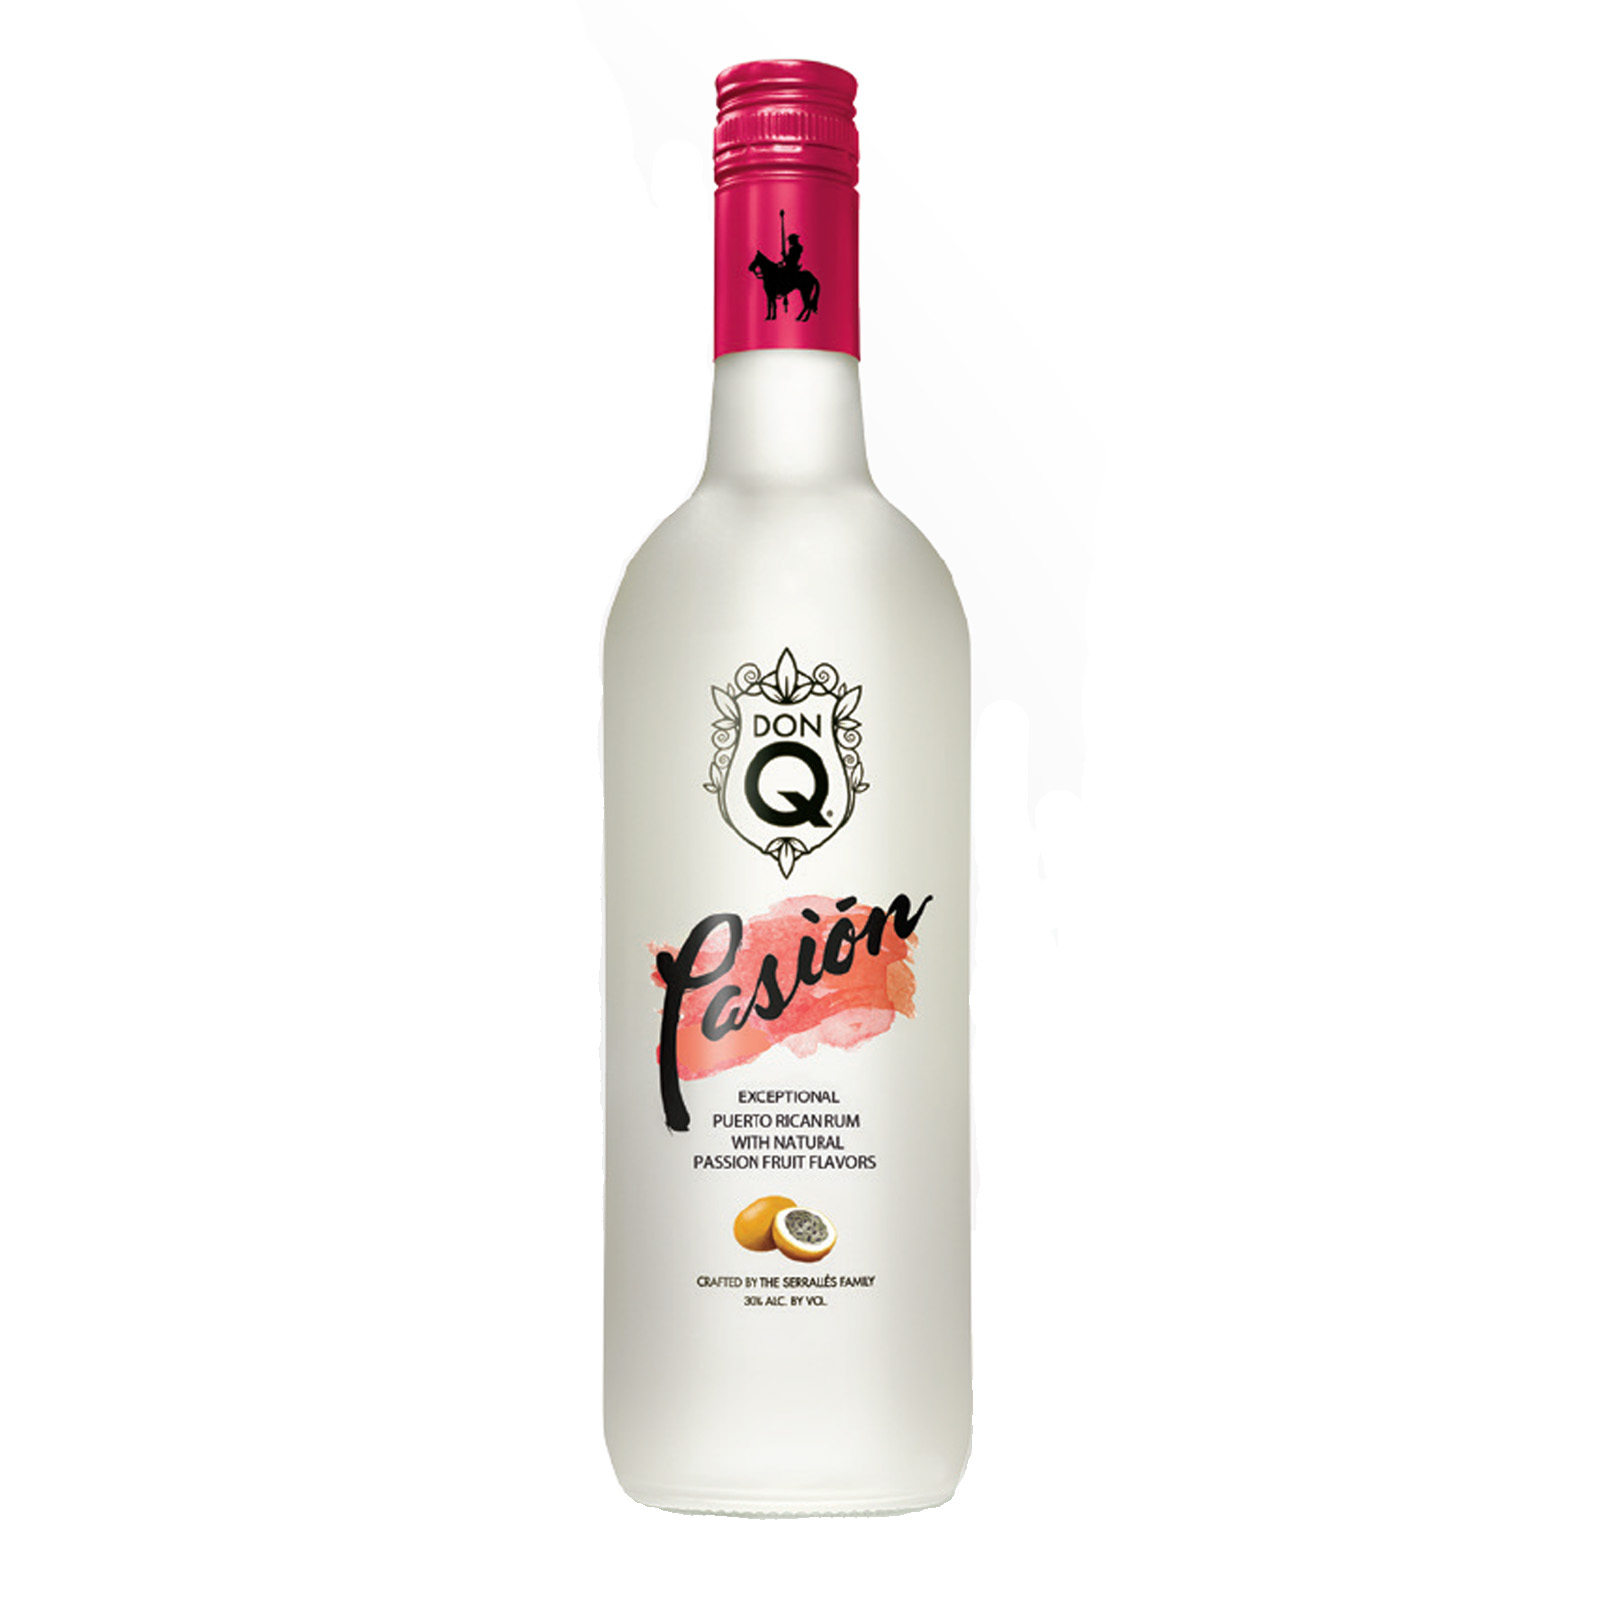 Don Q Pasión Passion Fruit Rum Liqueur